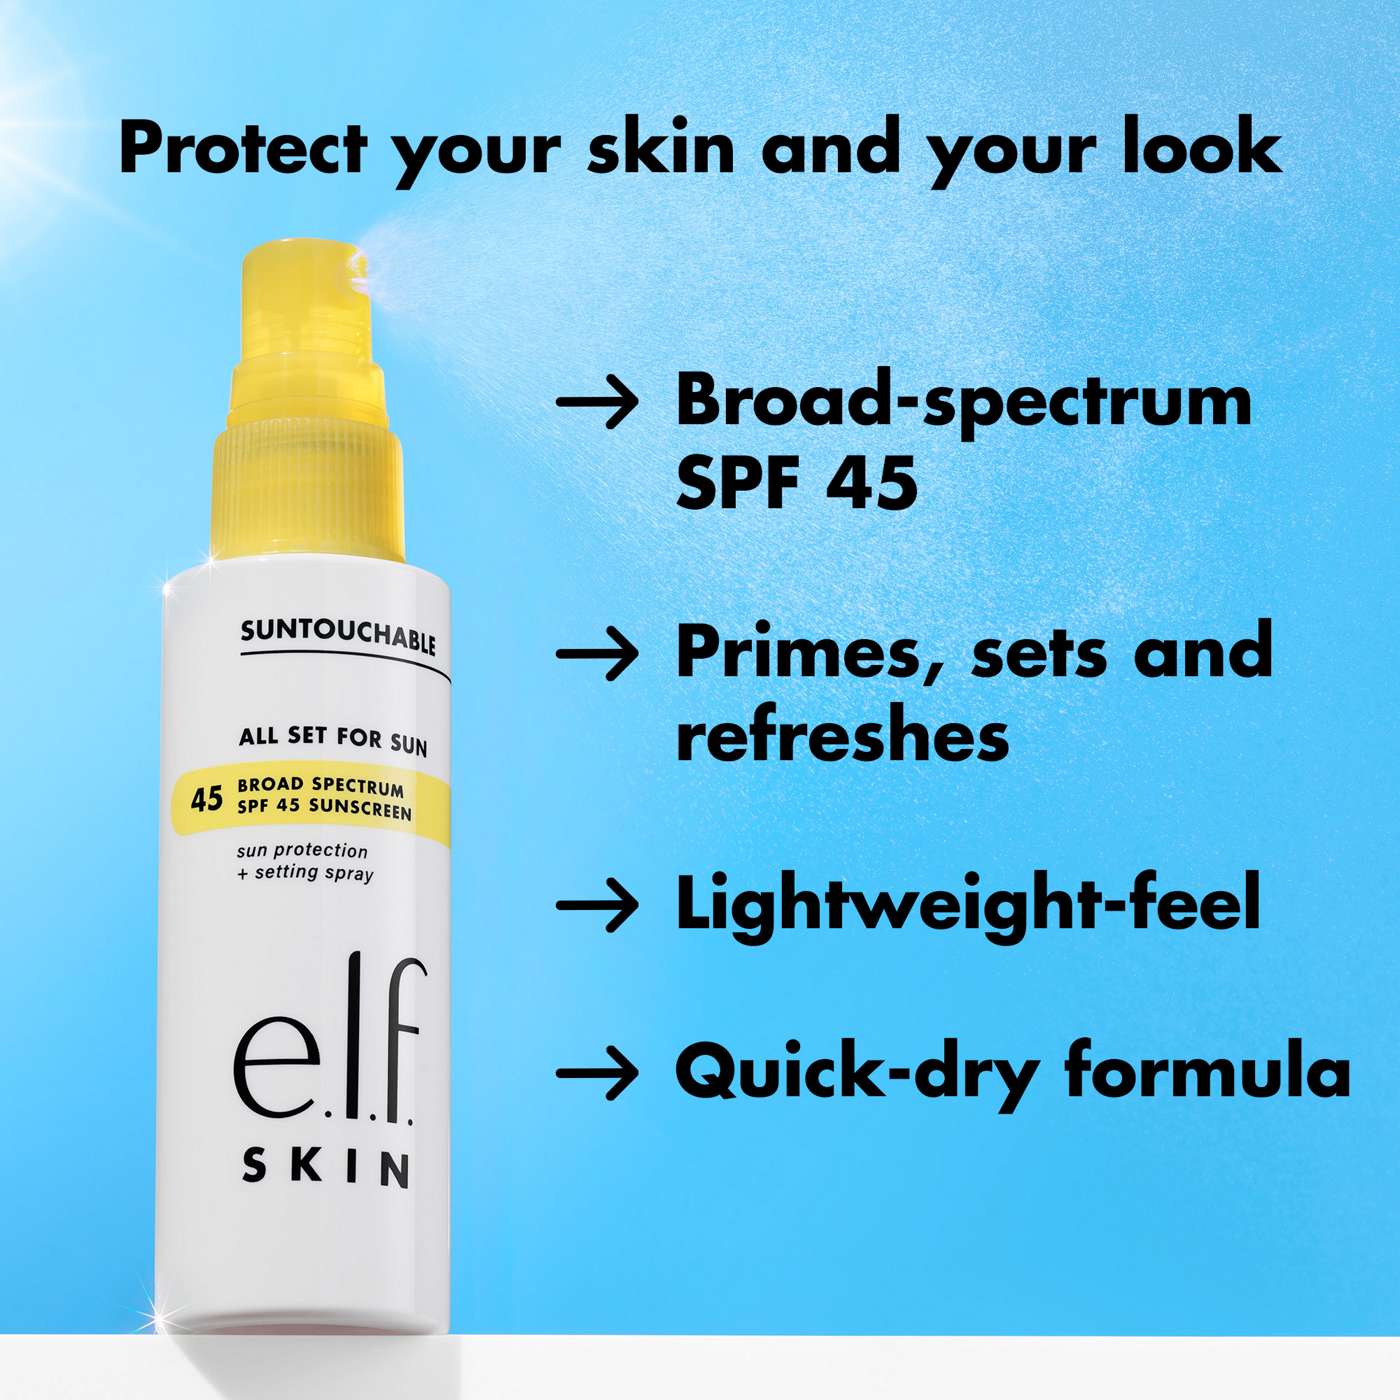 e.l.f. SKIN Suntouchable All Set For Sun Sunscreen SPF 45; image 10 of 12